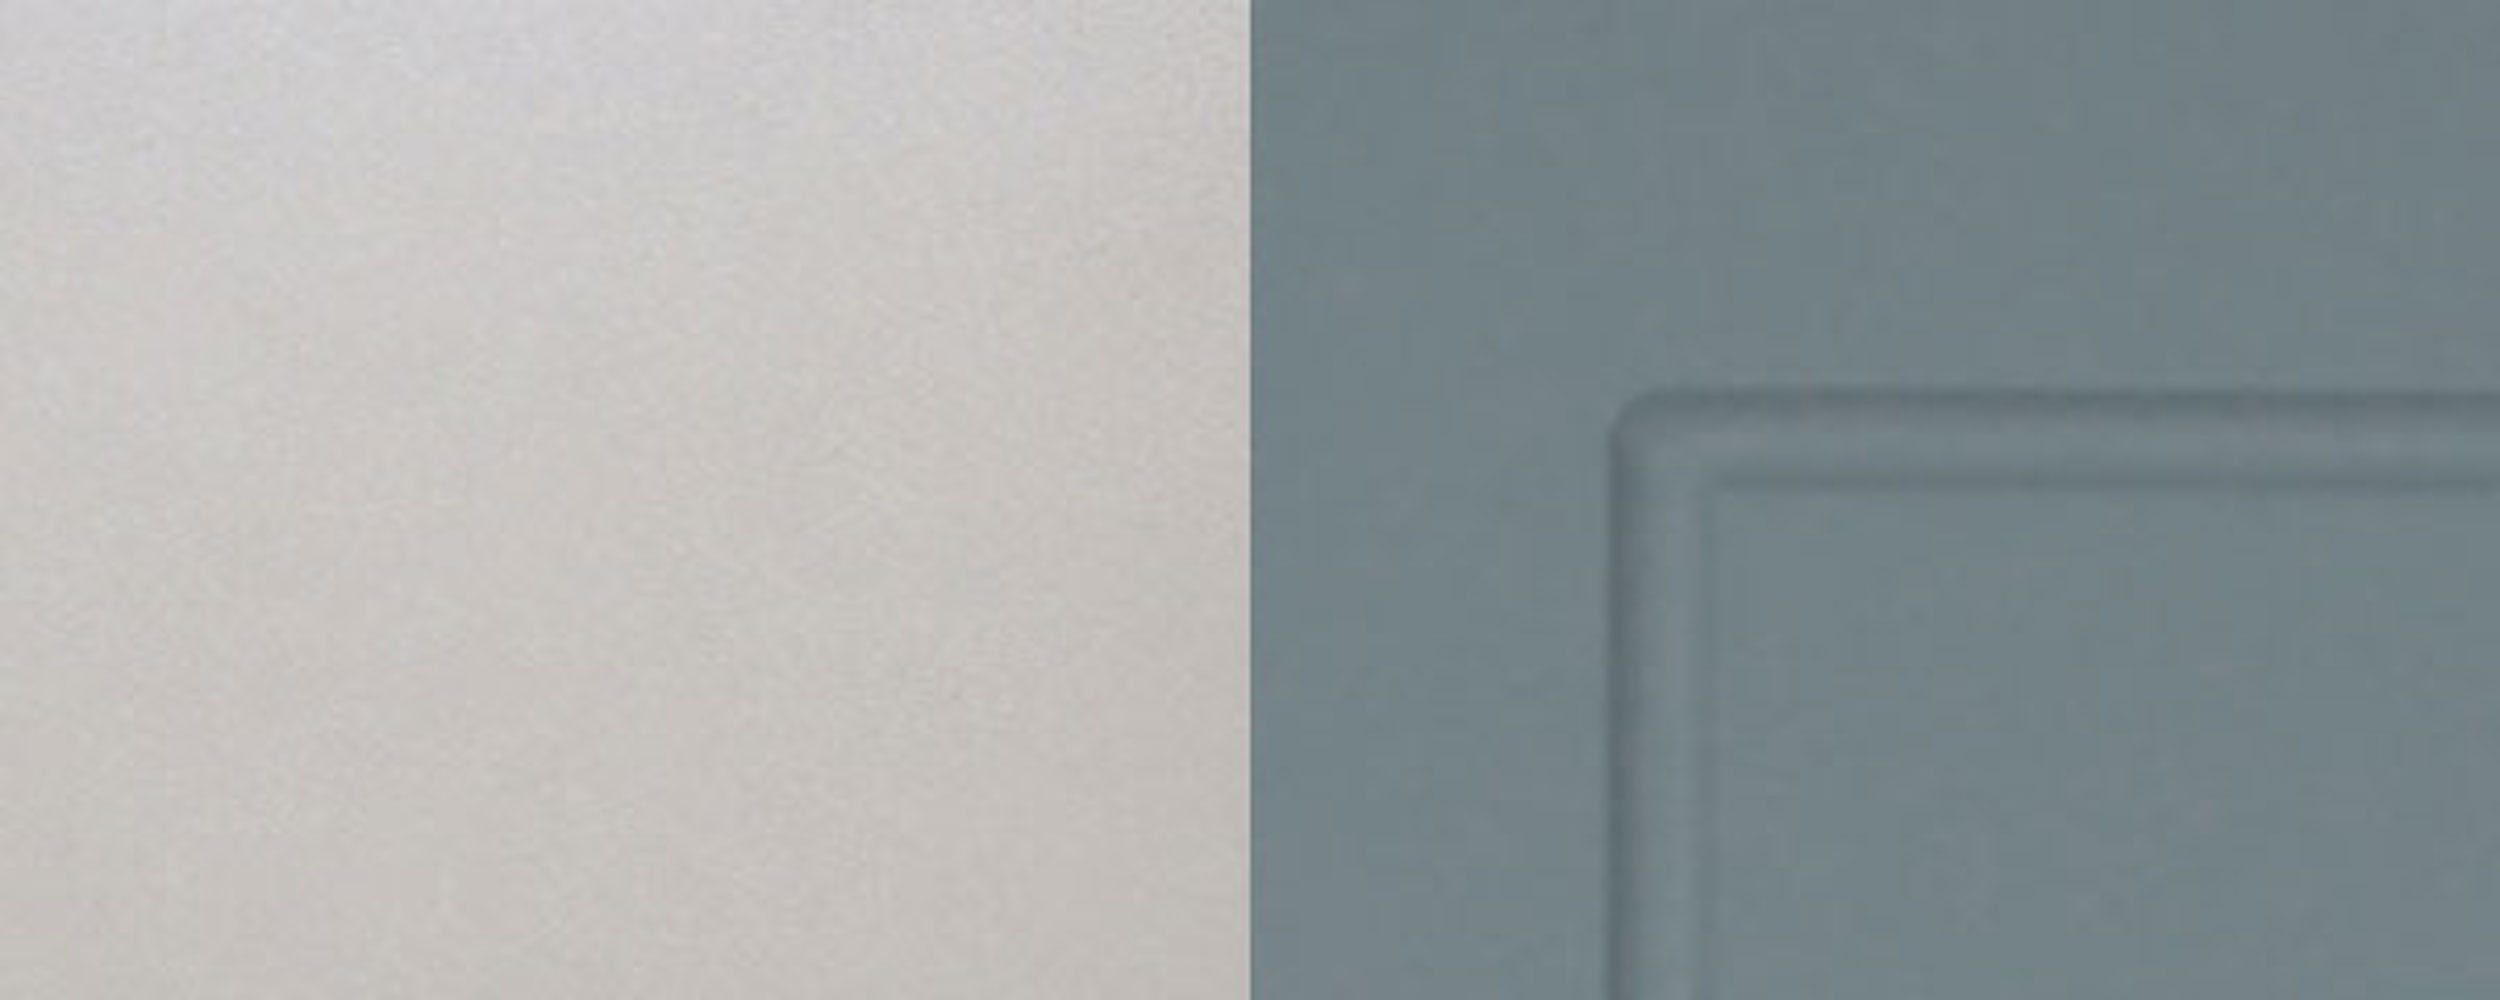 Feldmann-Wohnen Klapphängeschrank Kvantum (Kvantum) & 90cm Korpusfarbe Front- Klapptür mint mit matt 1 wählbar